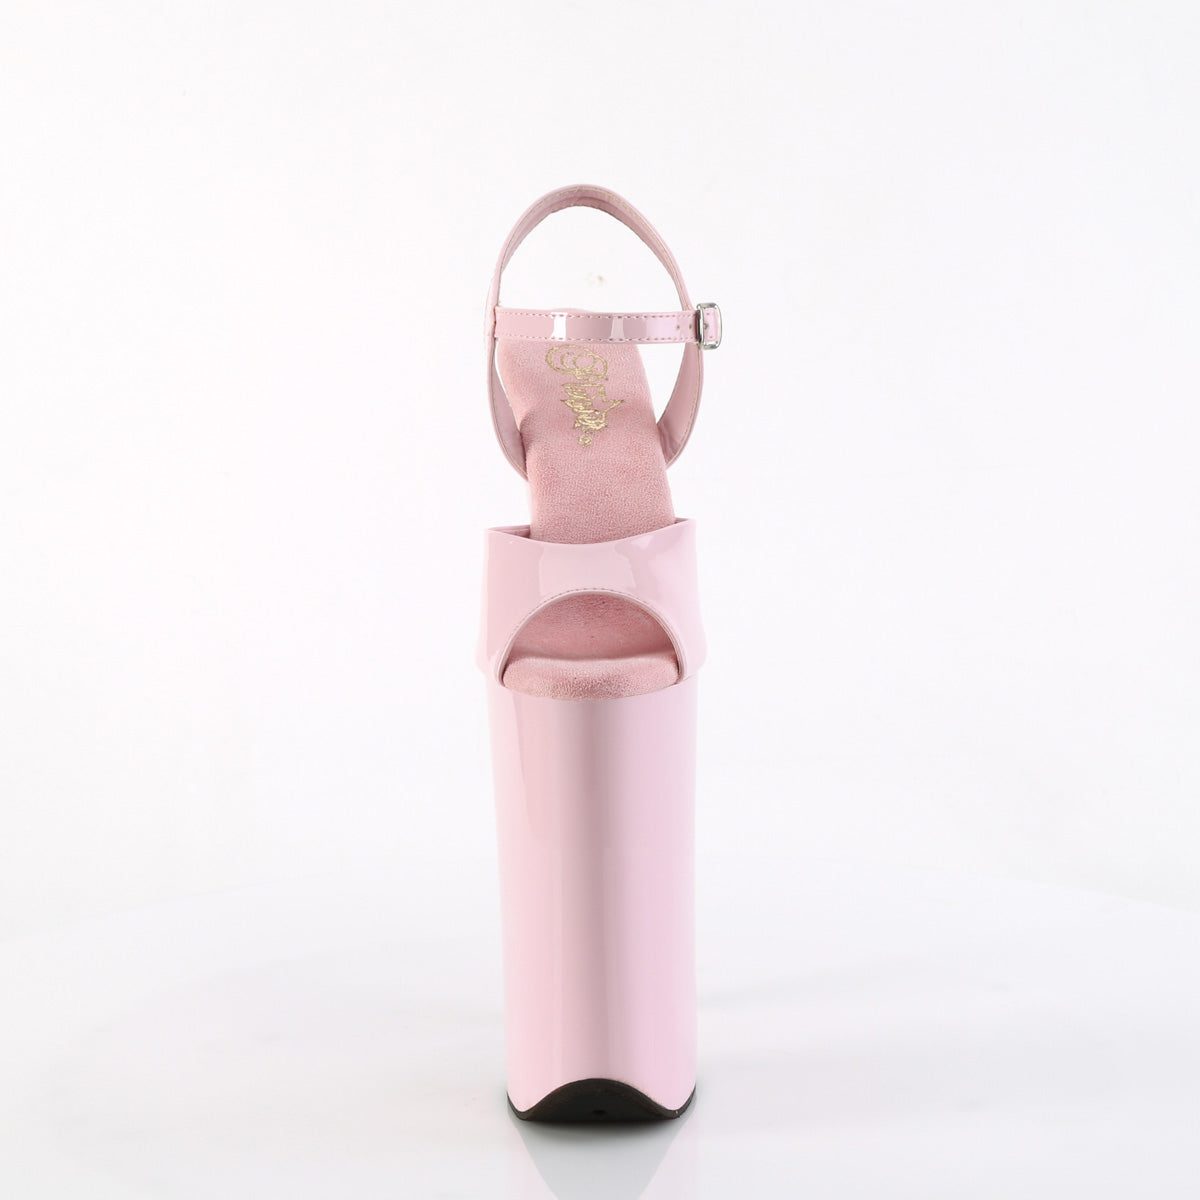 BEYOND-009 Pleaser B Pink Patent/B Pink Platform Shoes [Extreme High Heels]